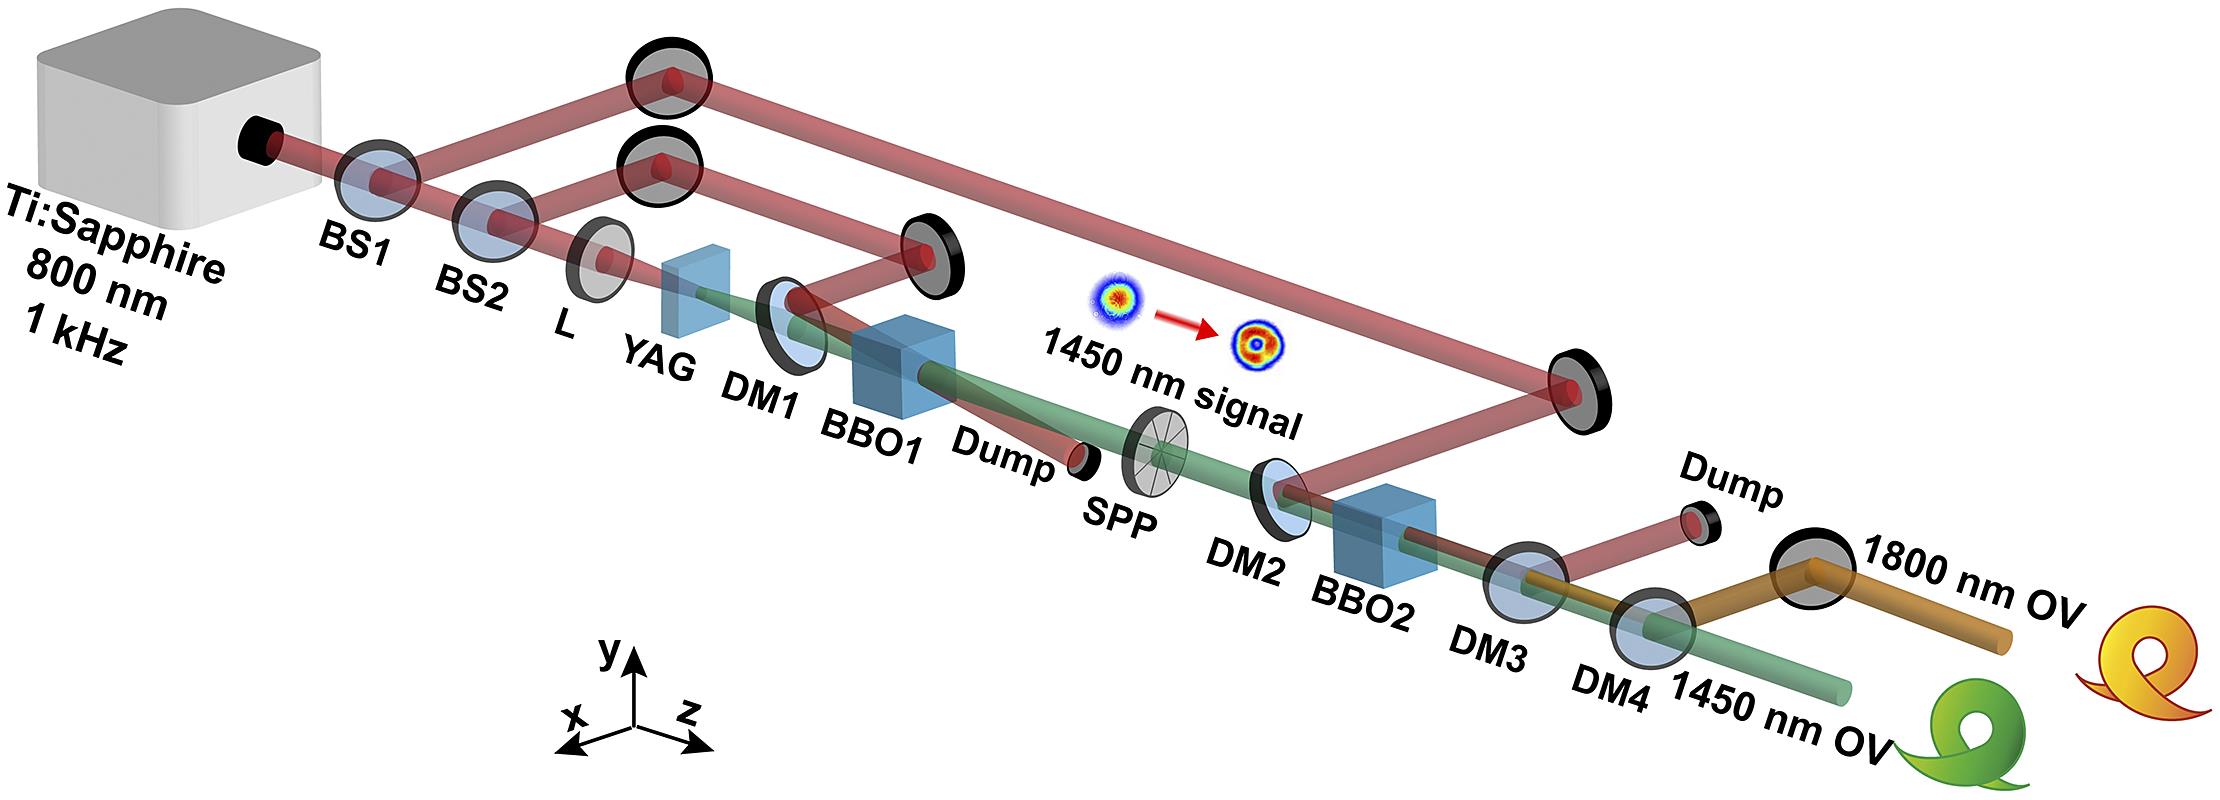 Schematic of the infrared vortex laser system. BS, beam splitter; L, lens; YAG, yttrium aluminum garnet crystal; DM, dichroic mirror; SPP, spiral phase plate; BBO, BaB2O4.